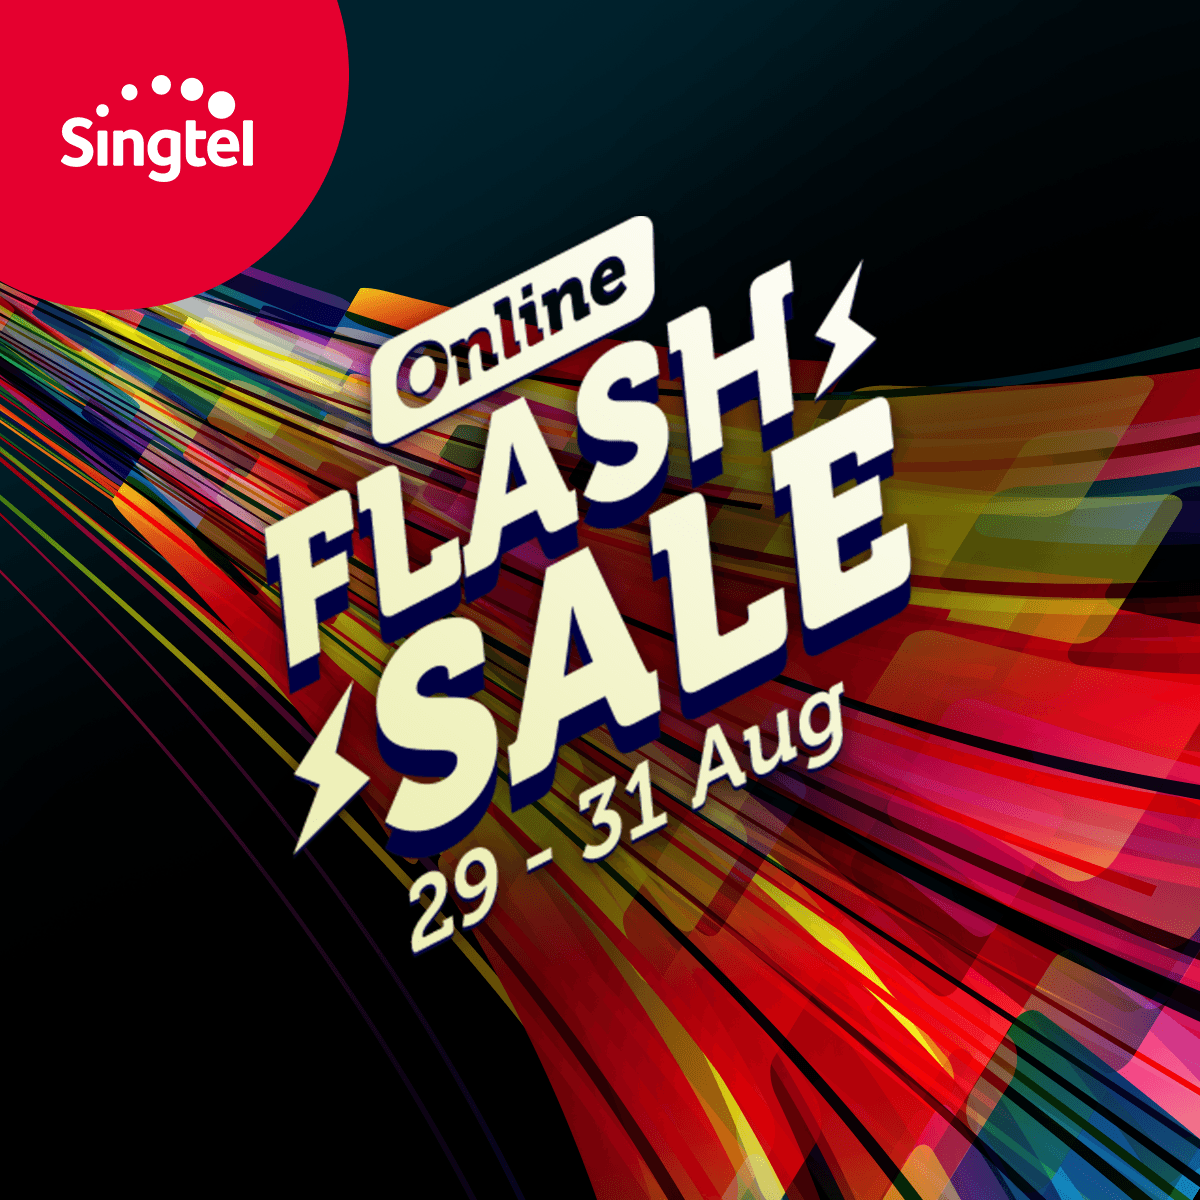 Singtel Singapore Online Flash Sale FREE 6 Months 1Gbps Fibre Broadband Plan ends 31 Aug 2016